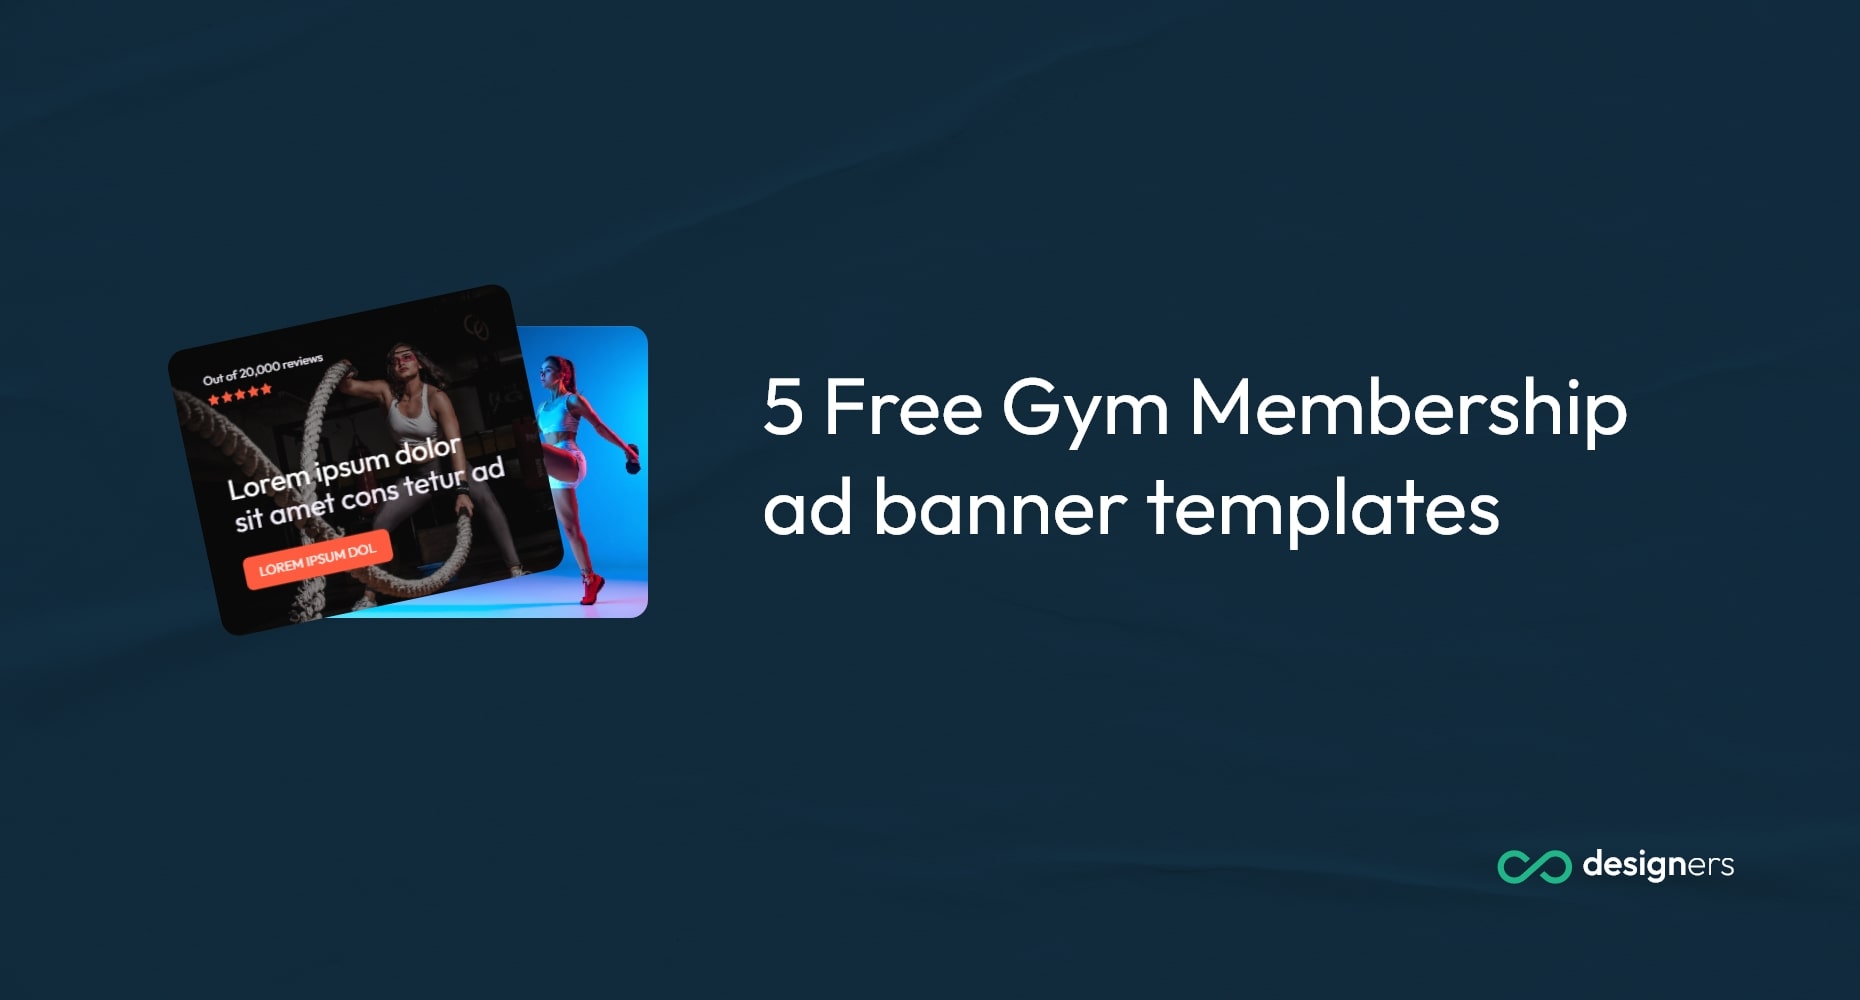 5 Free Gym Membership ad banner templates